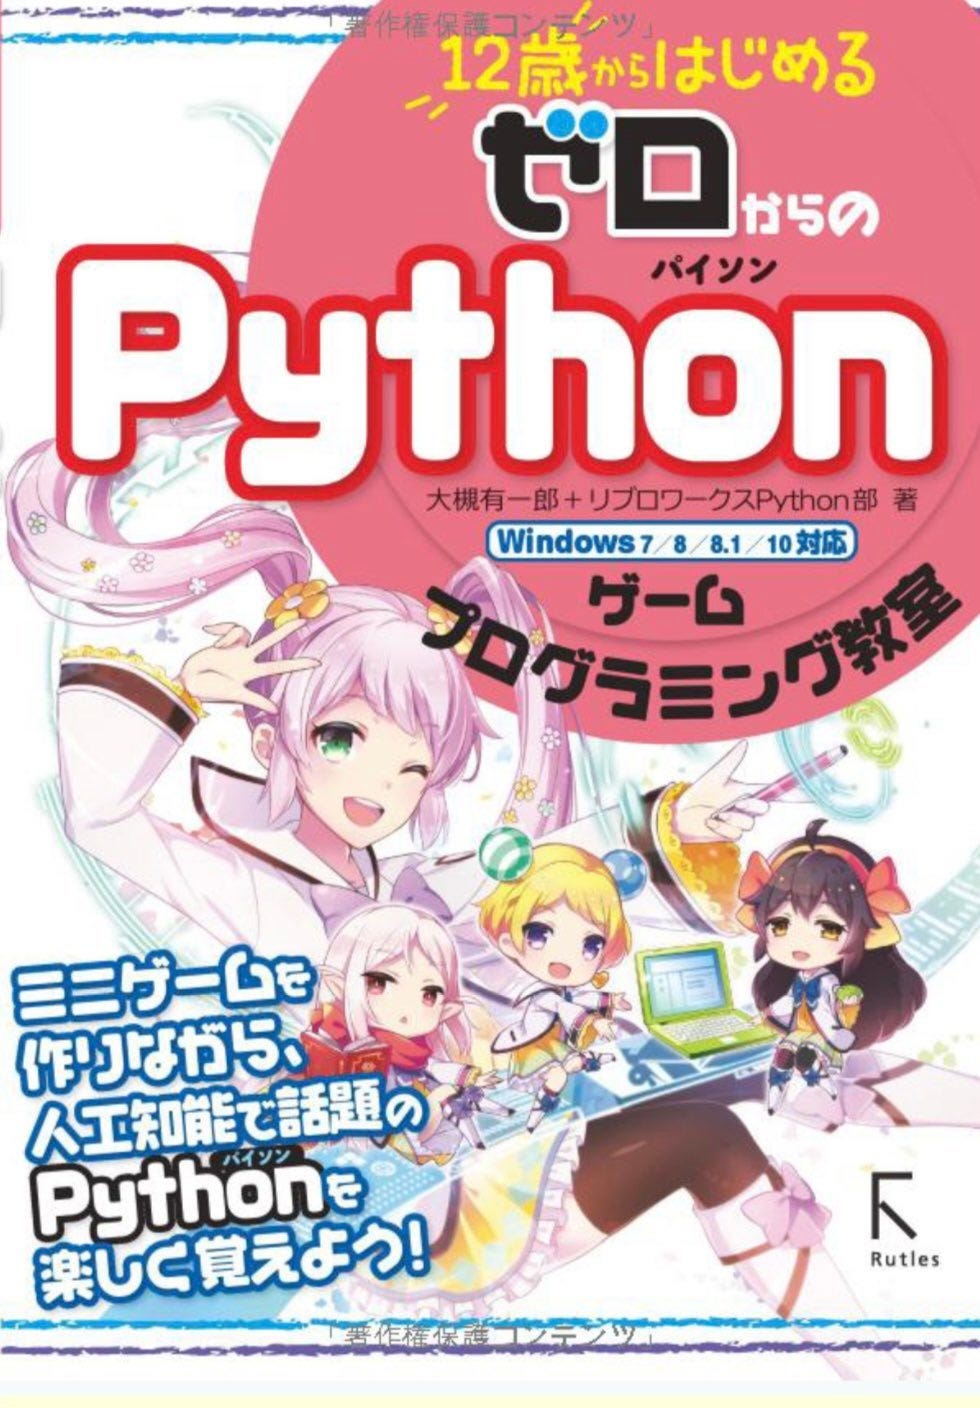 Japanese Python programming book : r/ProgrammerHumor